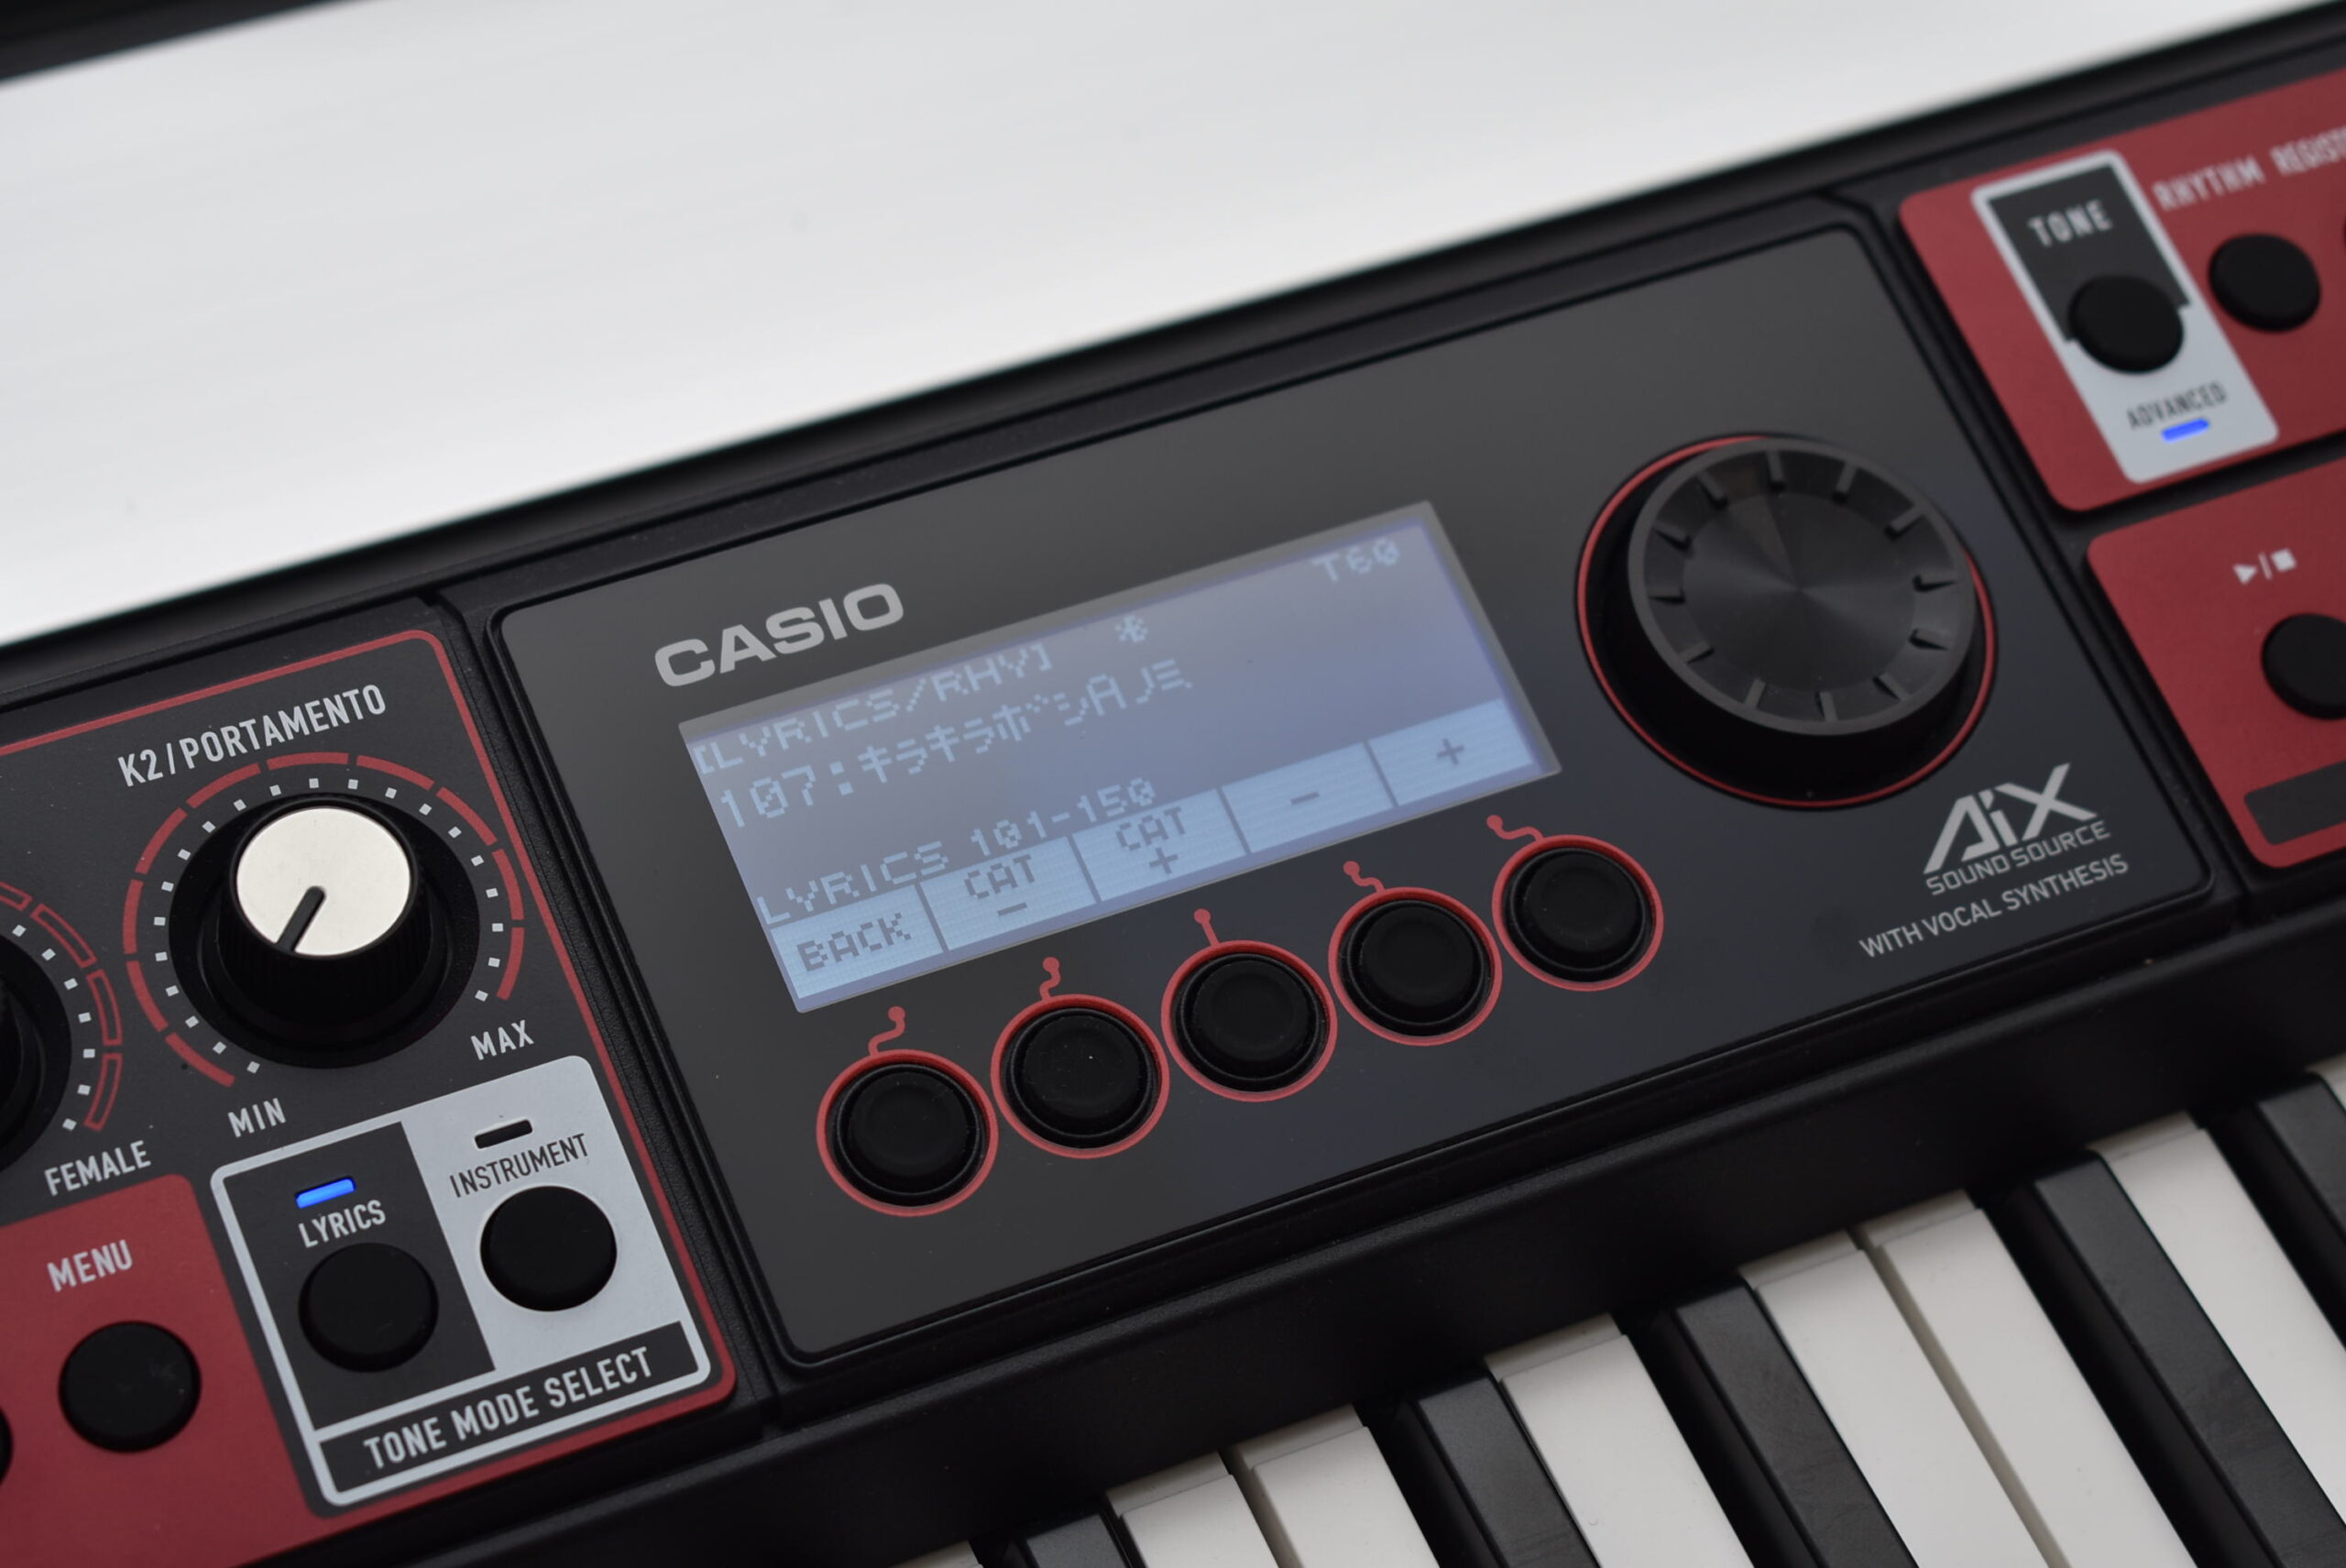 CASIOが歌うシンセサイザ・CT-S1000Vをリリース。和音も歌える新型 